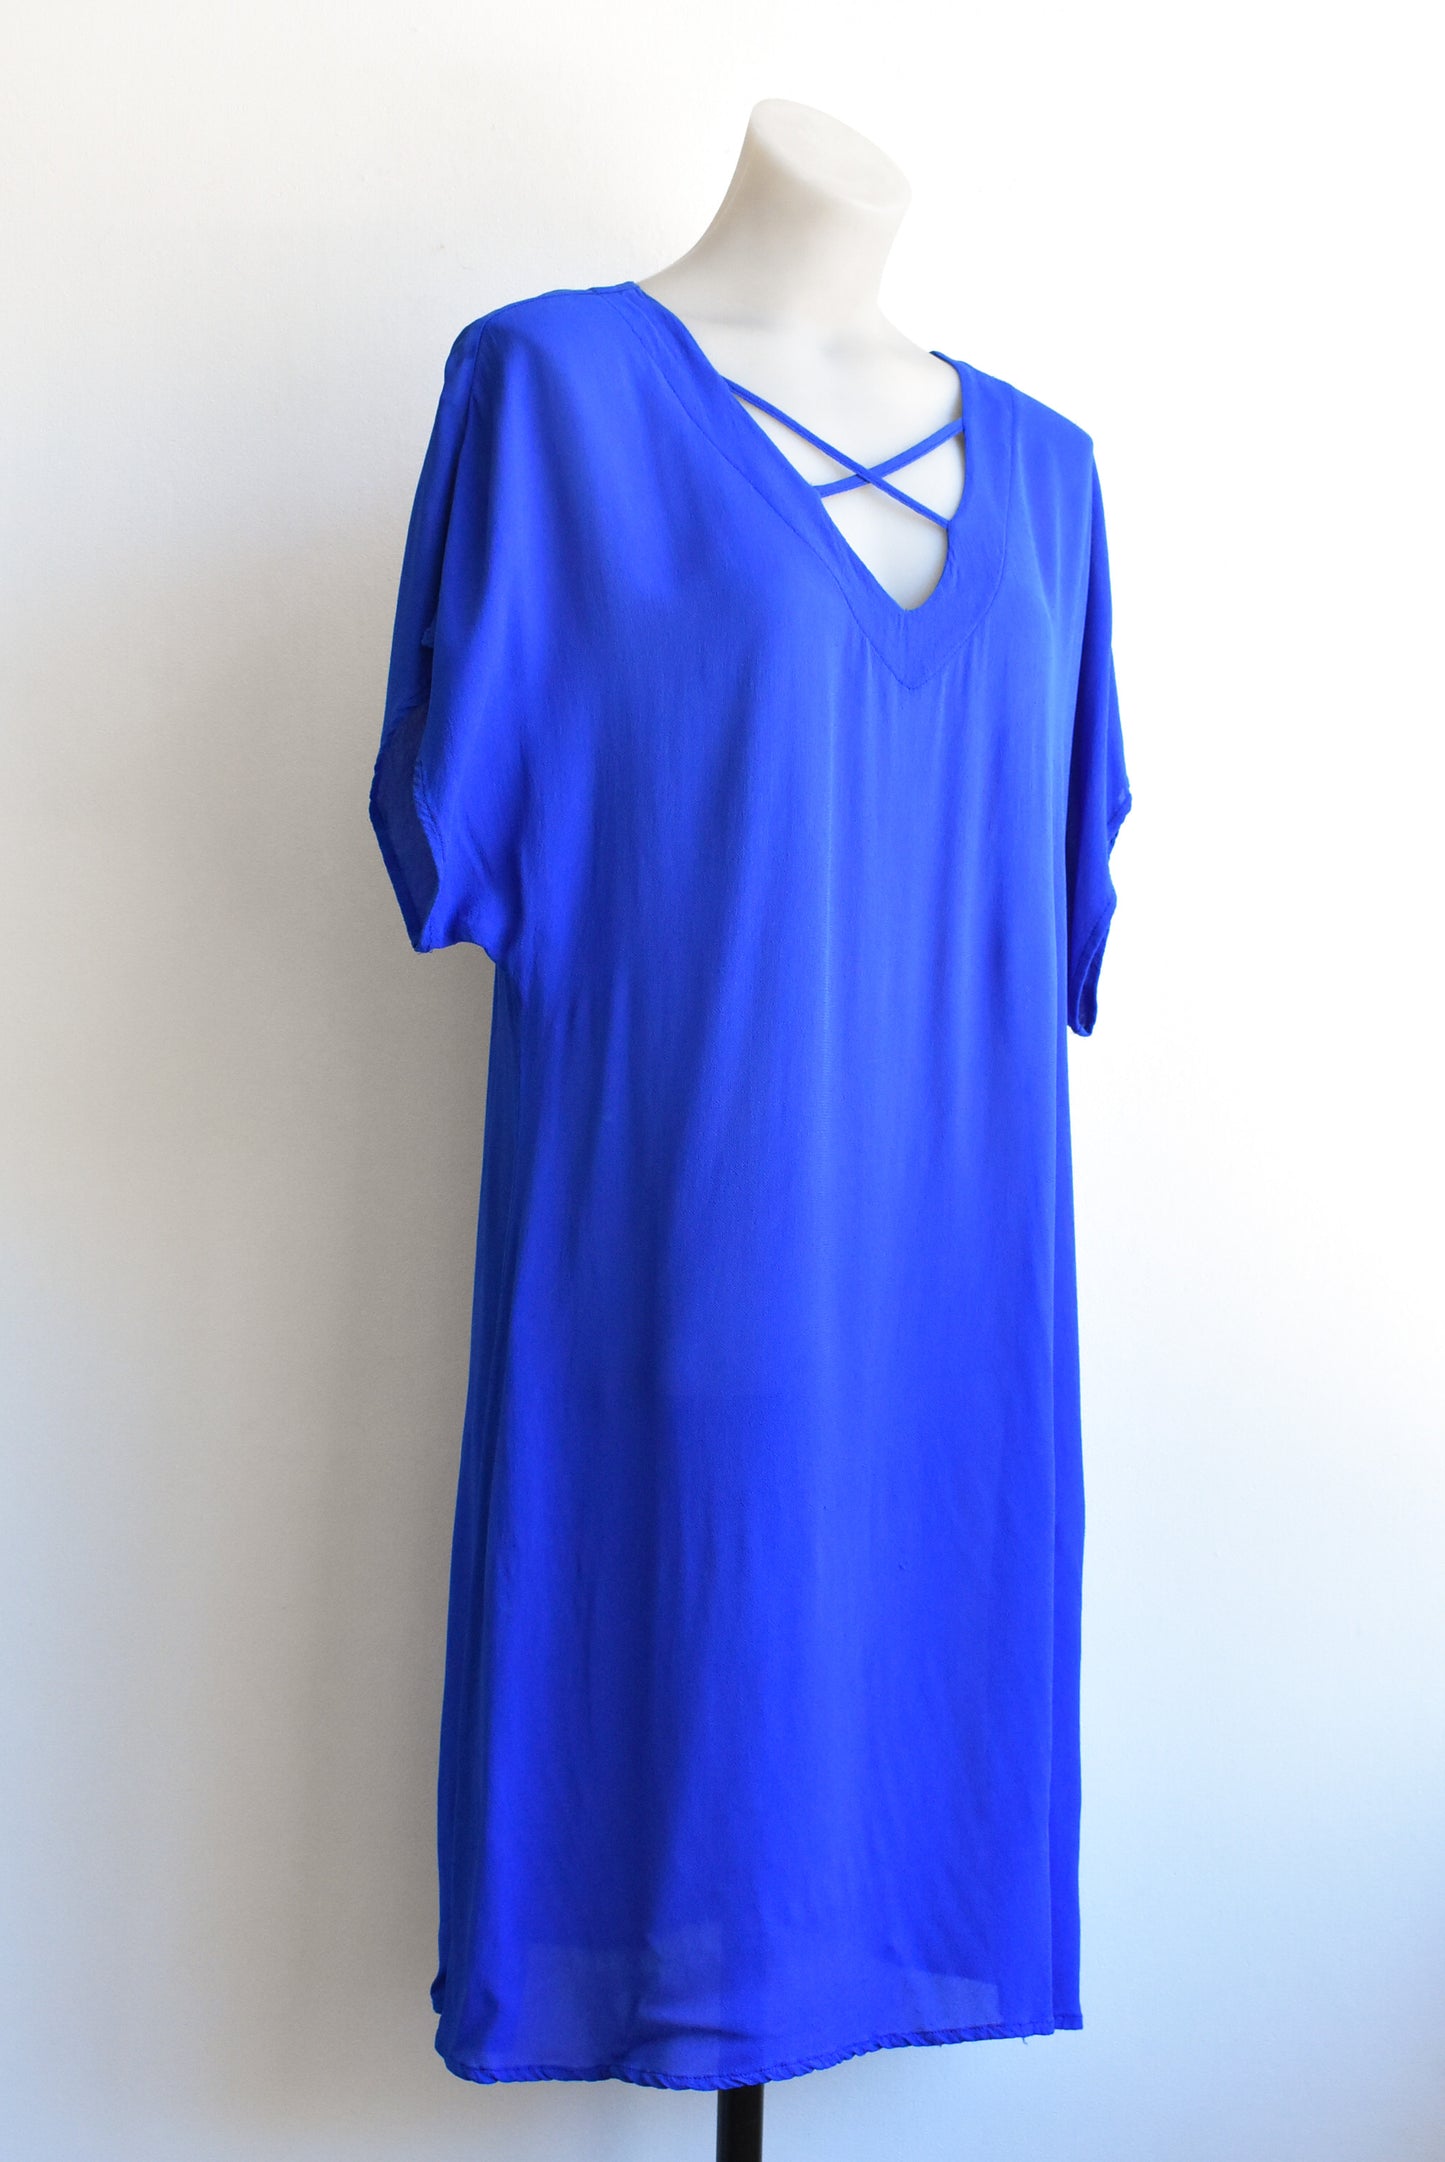 Ricochet sheer blue shift dress, size 8